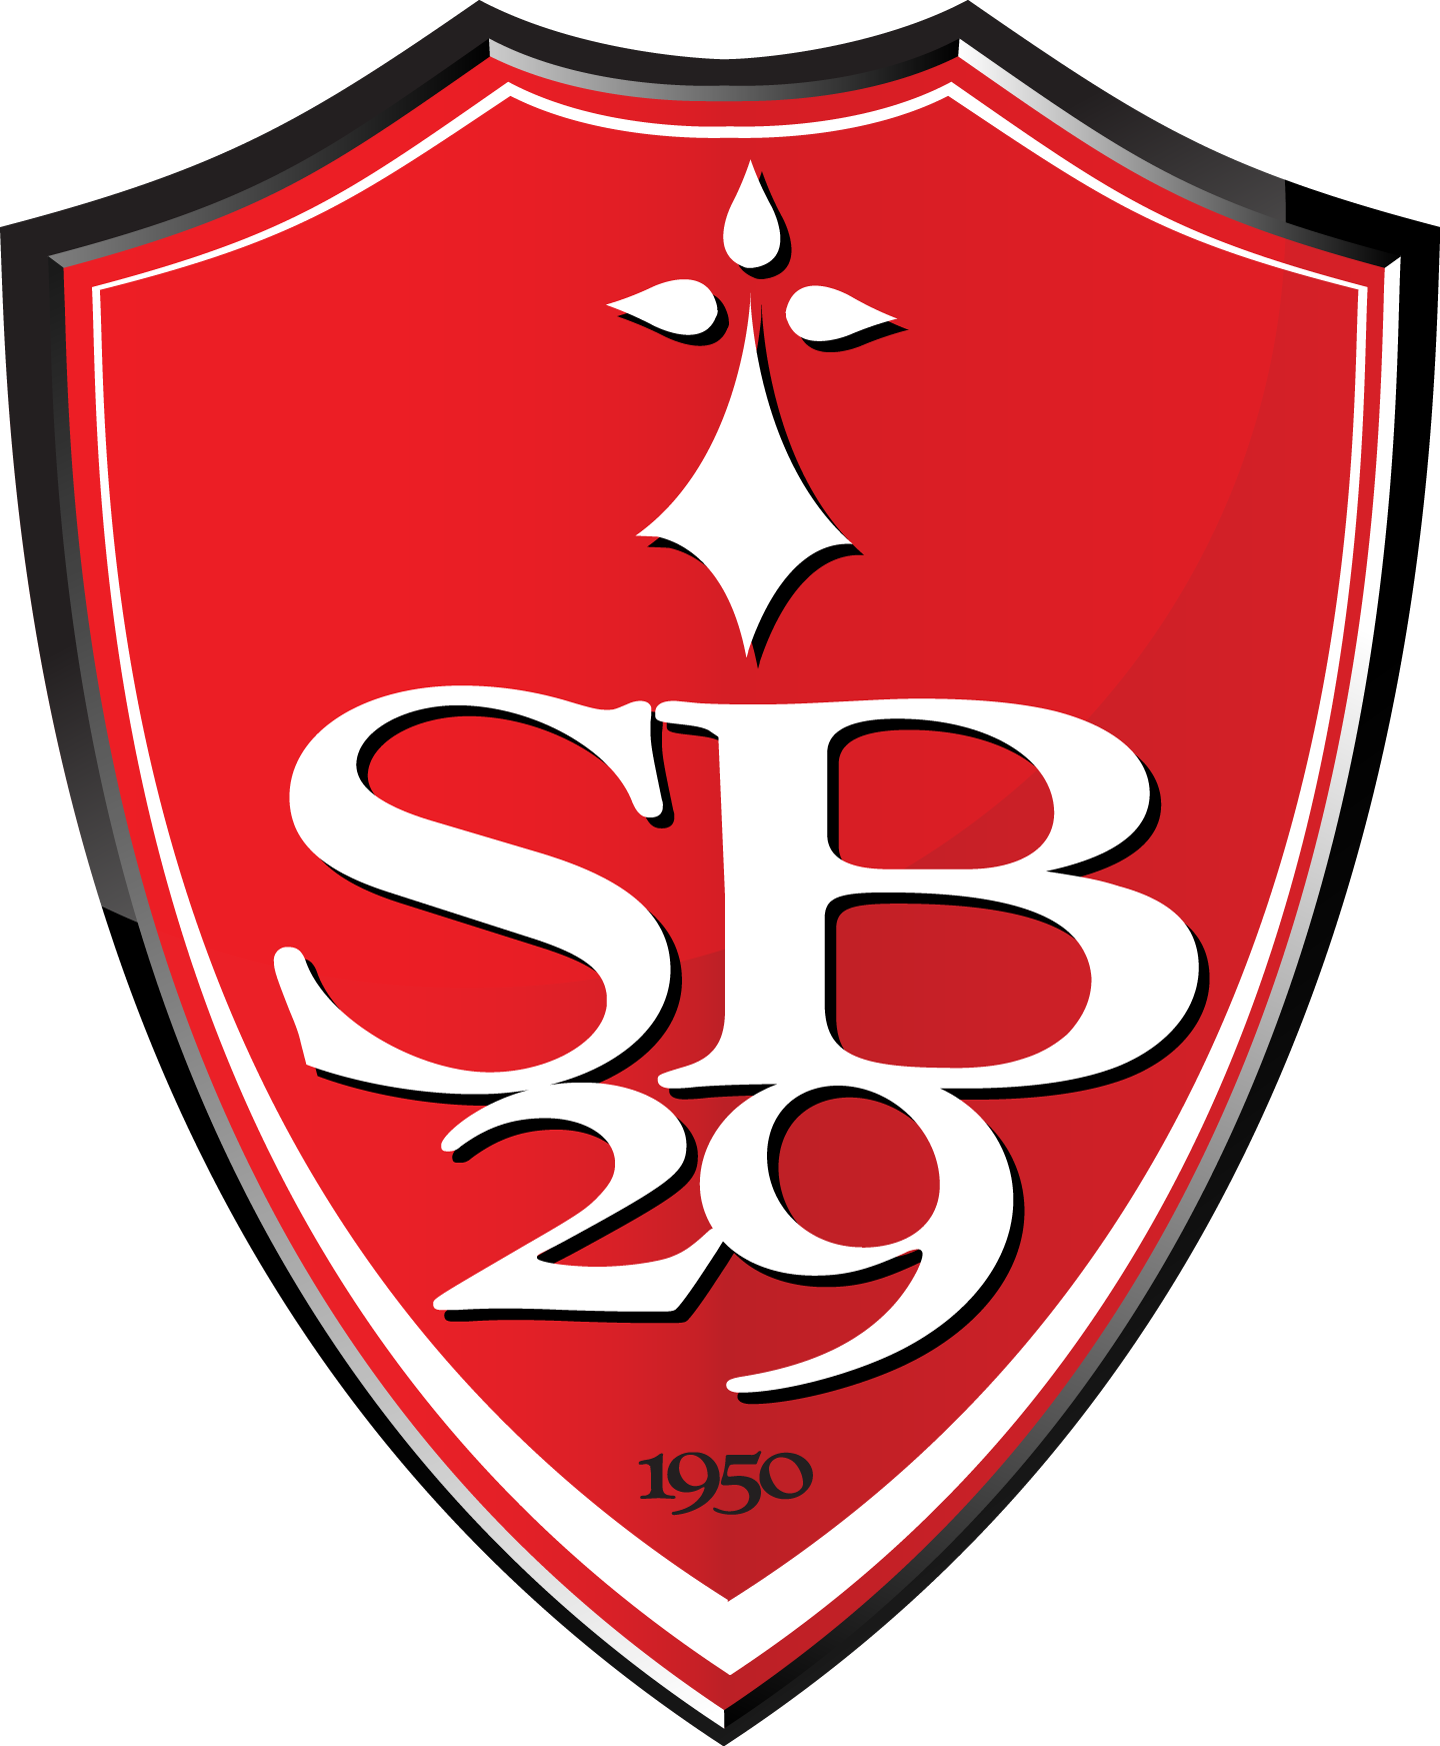 stade brestois 29 logo 2 - Stade Brestois 29 Logo